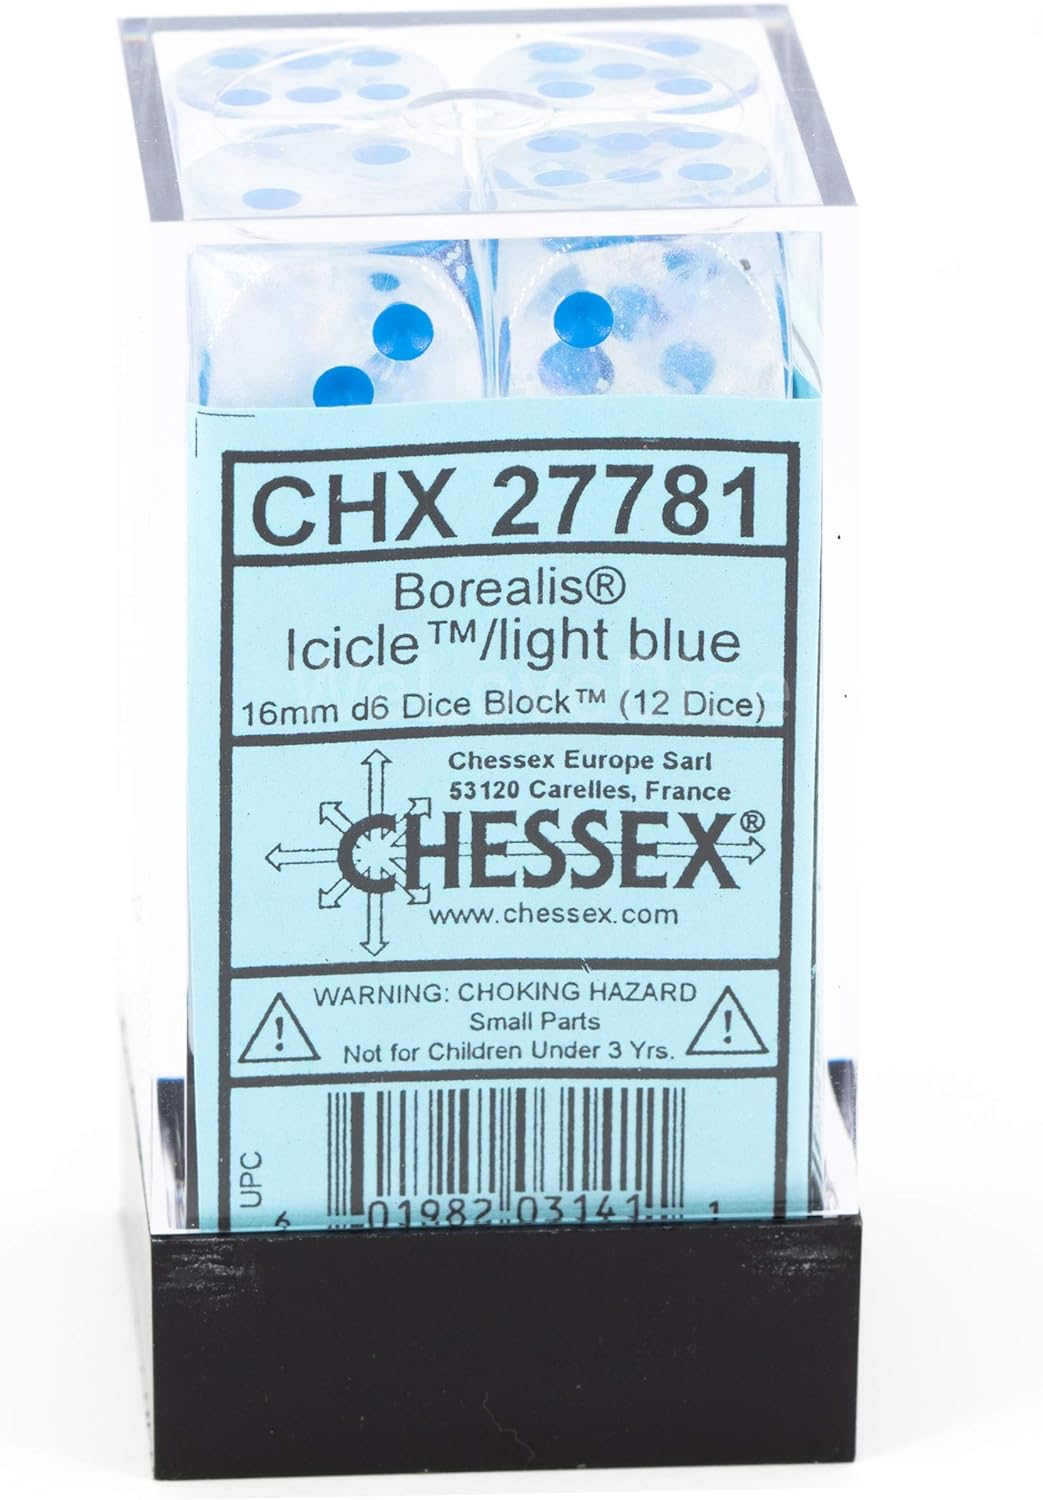 Chessex Borealis 16mm d6 Icicle/Light Blue Luminary Dice Block